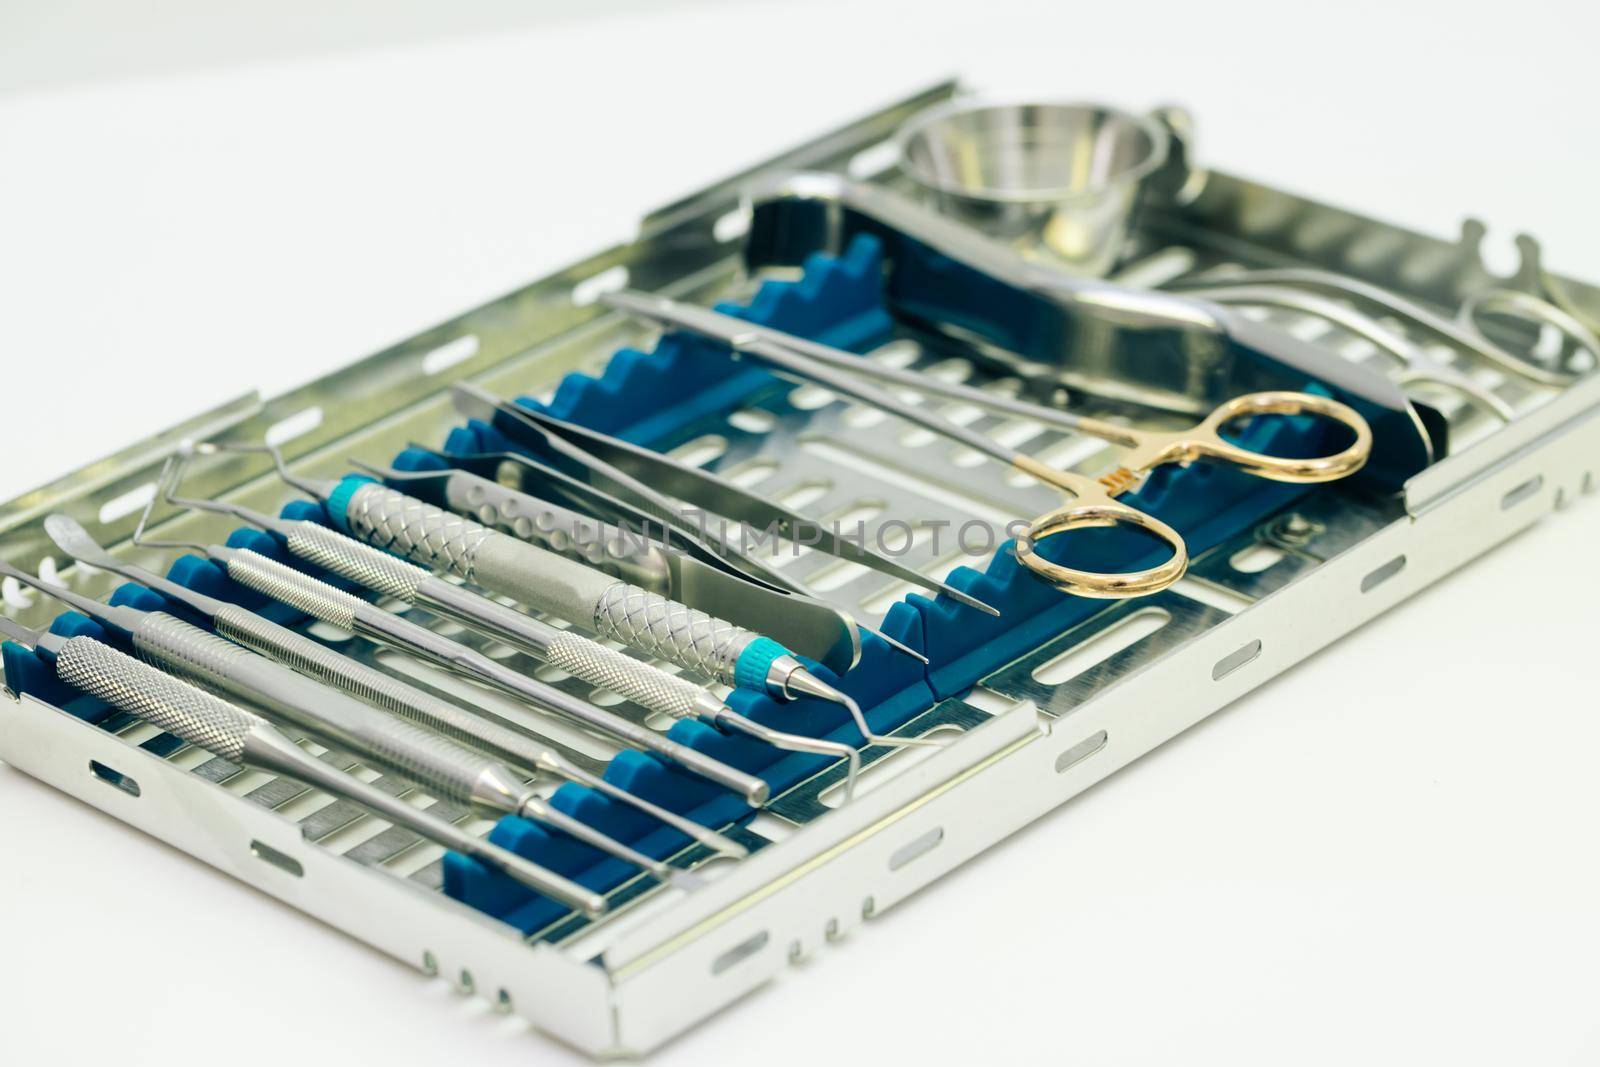 Dental implantation surgical set. Surgical kit of instruments used in dental implantology. Dentist orthopedist tools by uflypro